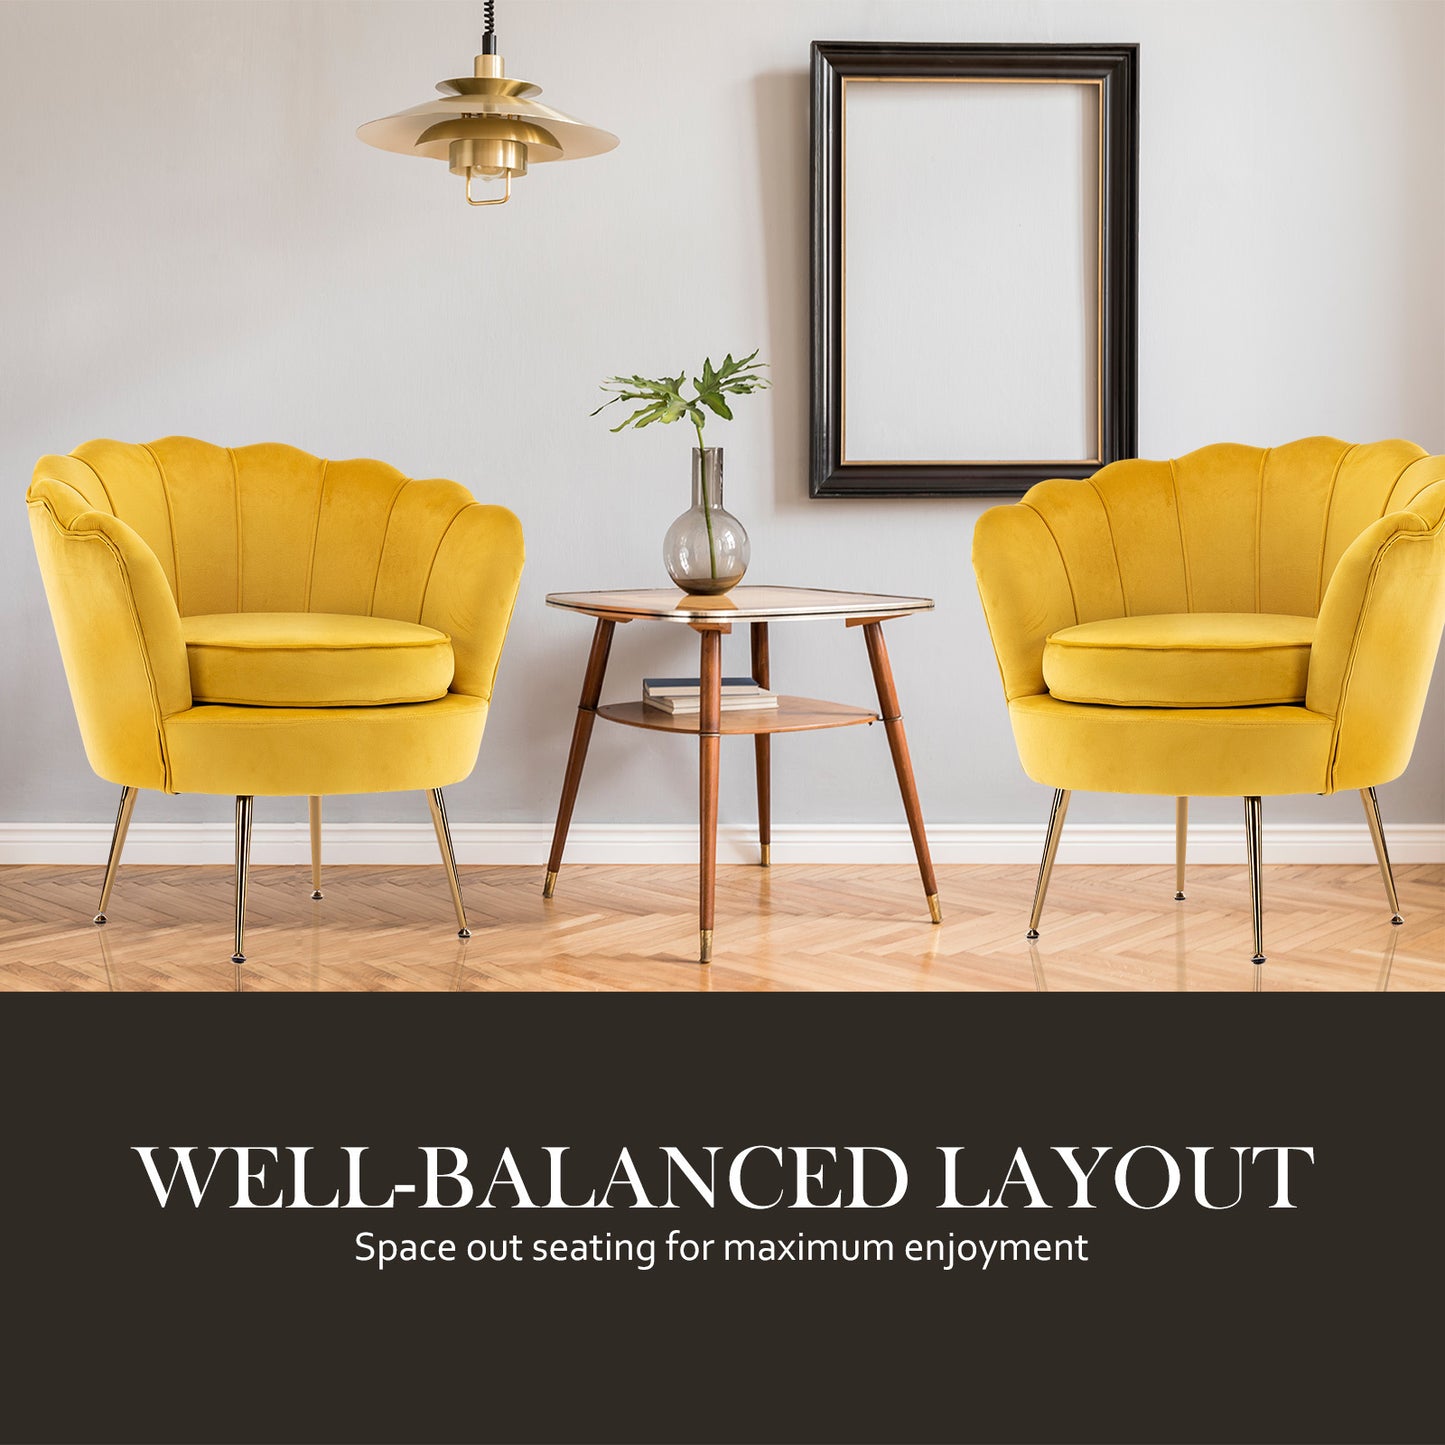 La Bella Shell Scallop Accent Velvet Lounge Chair - Yellow